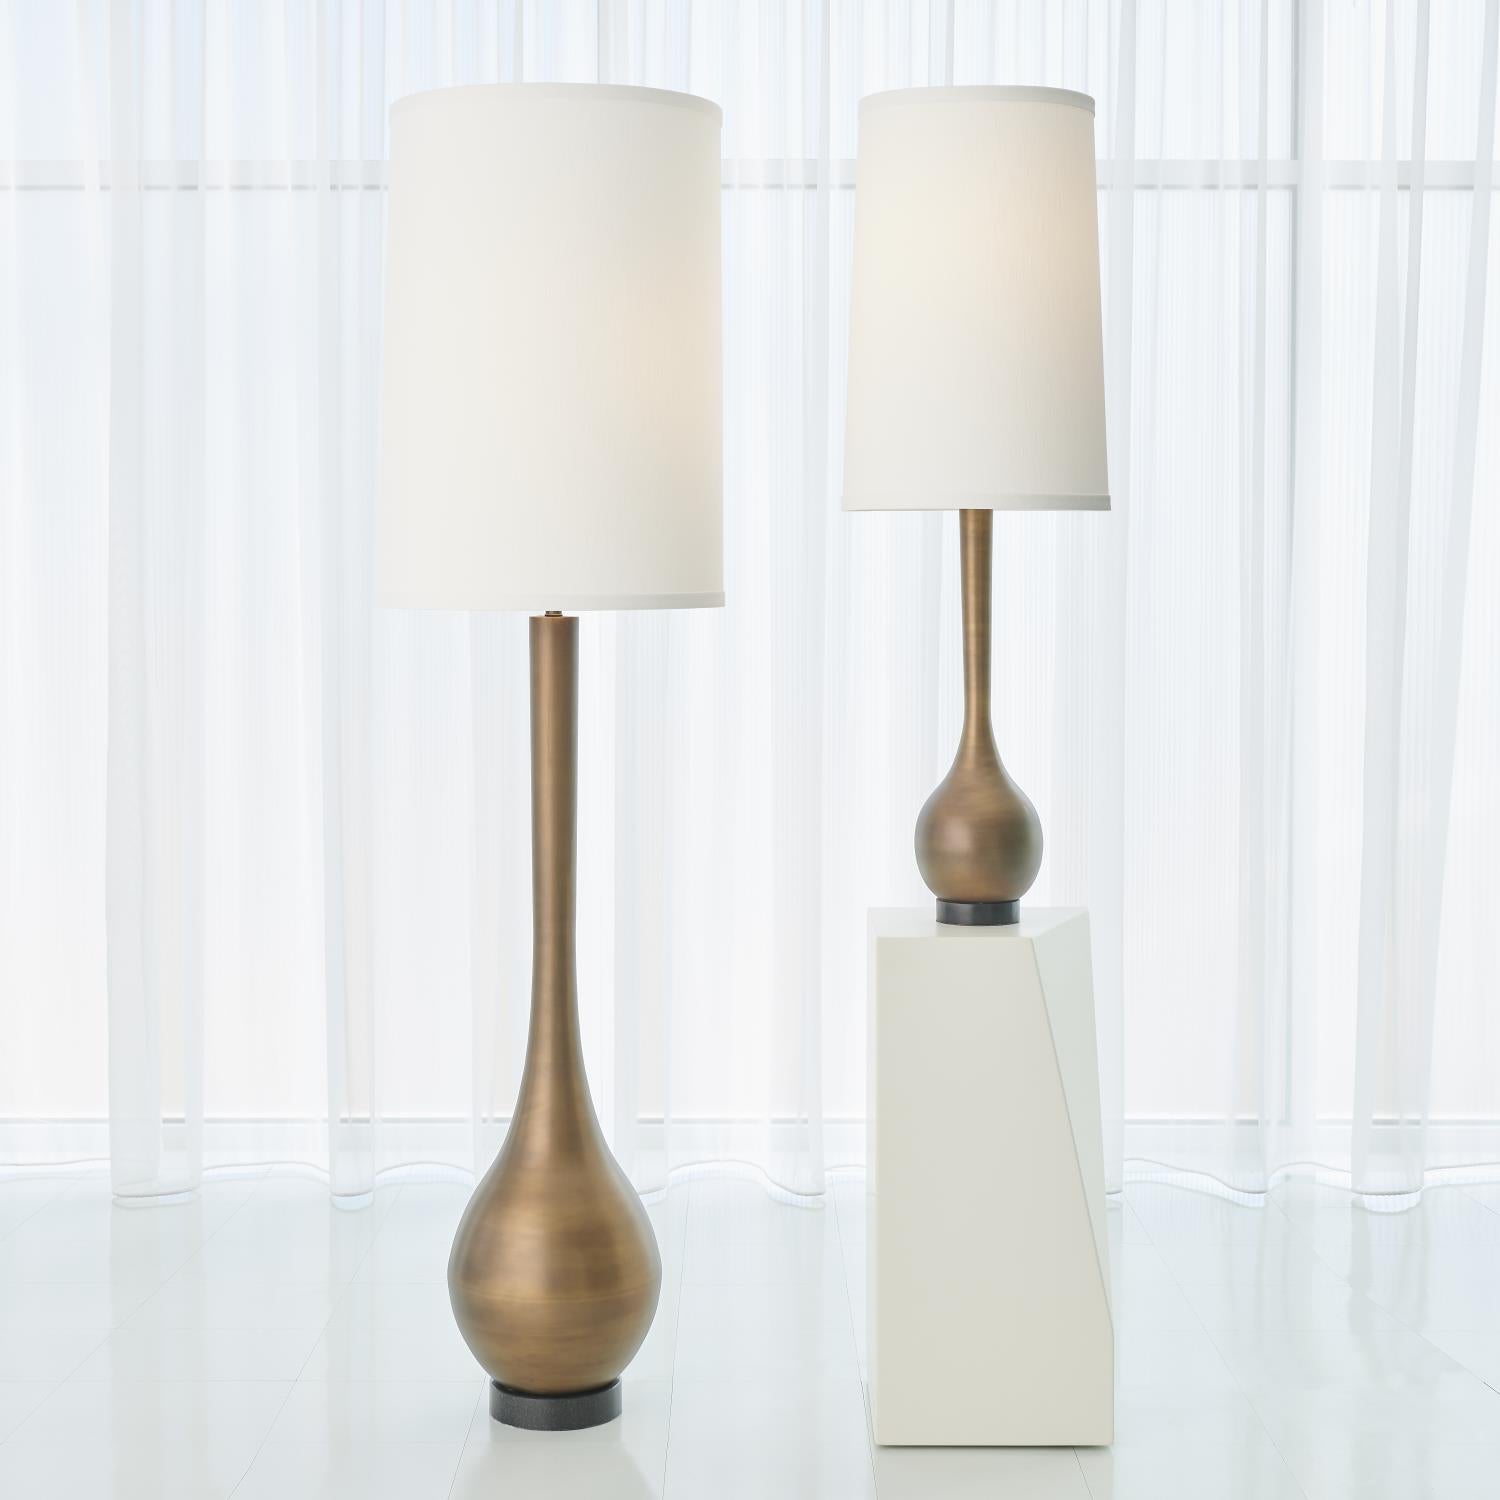 Bulb Table Lamp - Light Bronze - Grats Decor Interior Design & Build Inc.